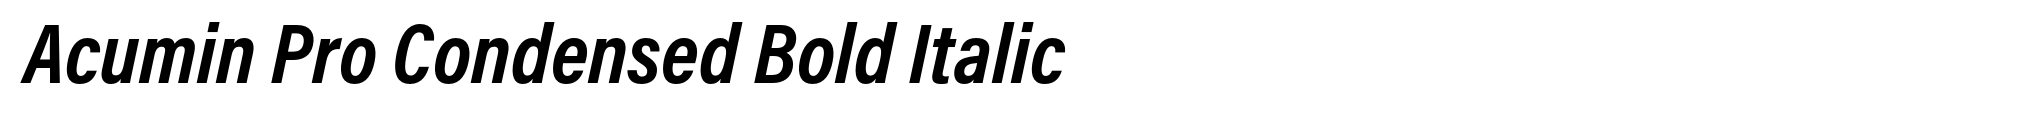 Acumin Pro Condensed Bold Italic image